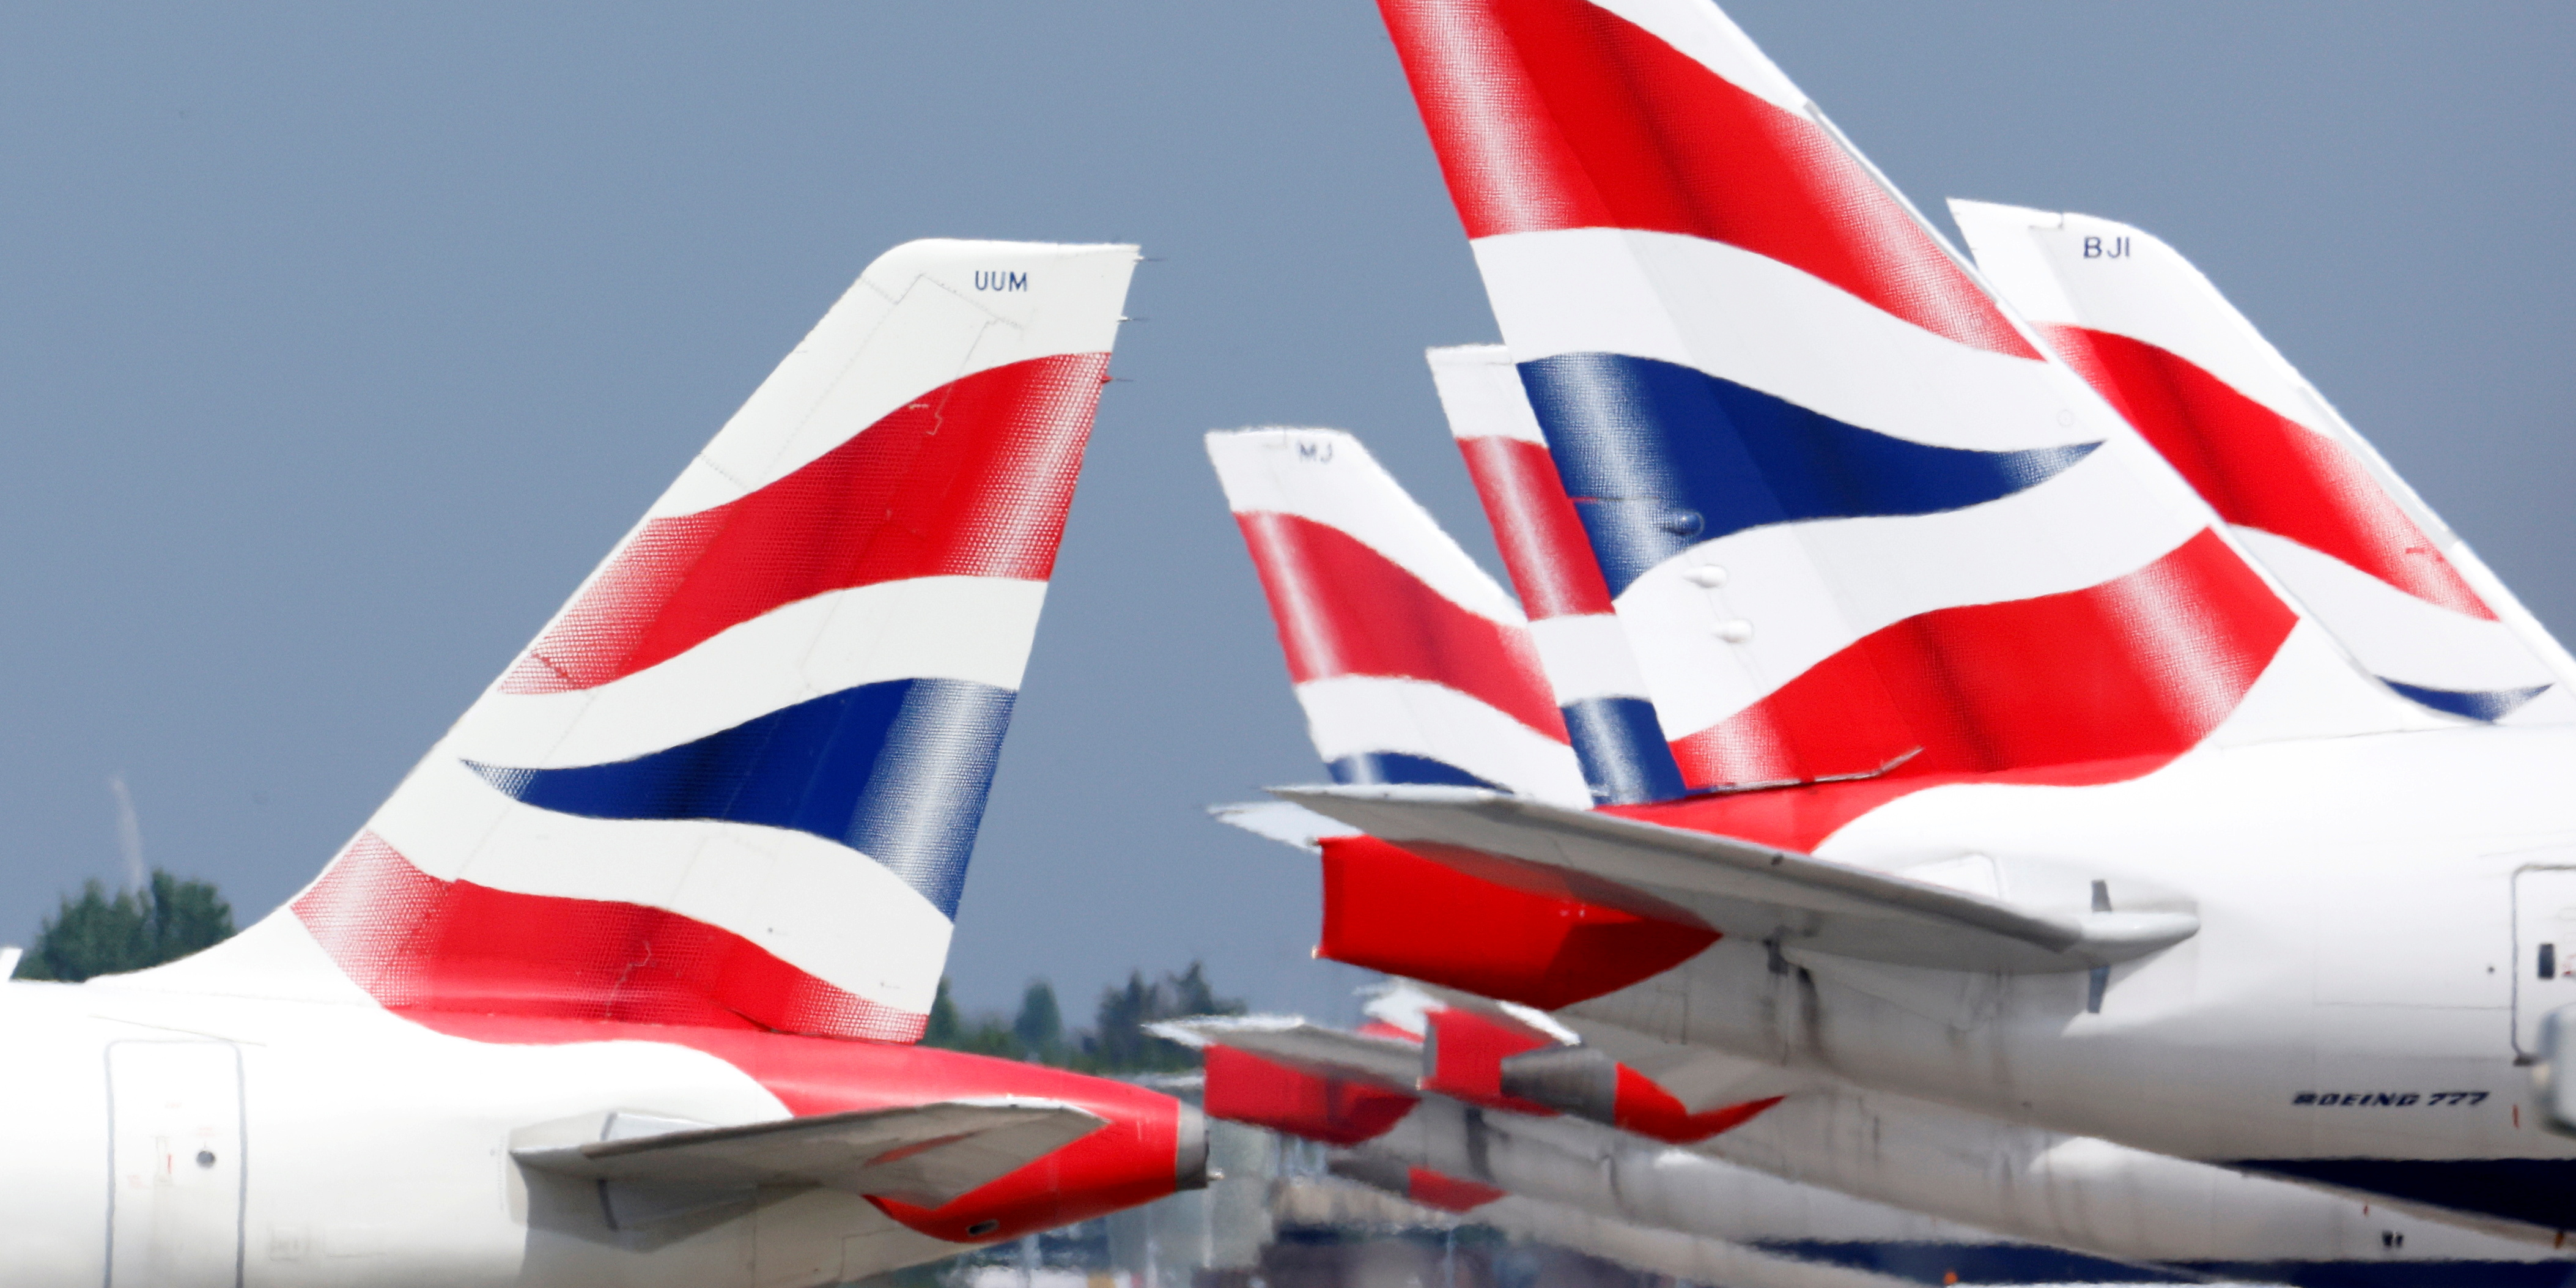 IAG (British Airways, Iberia) divise sa perte par neuf au premier trimestre